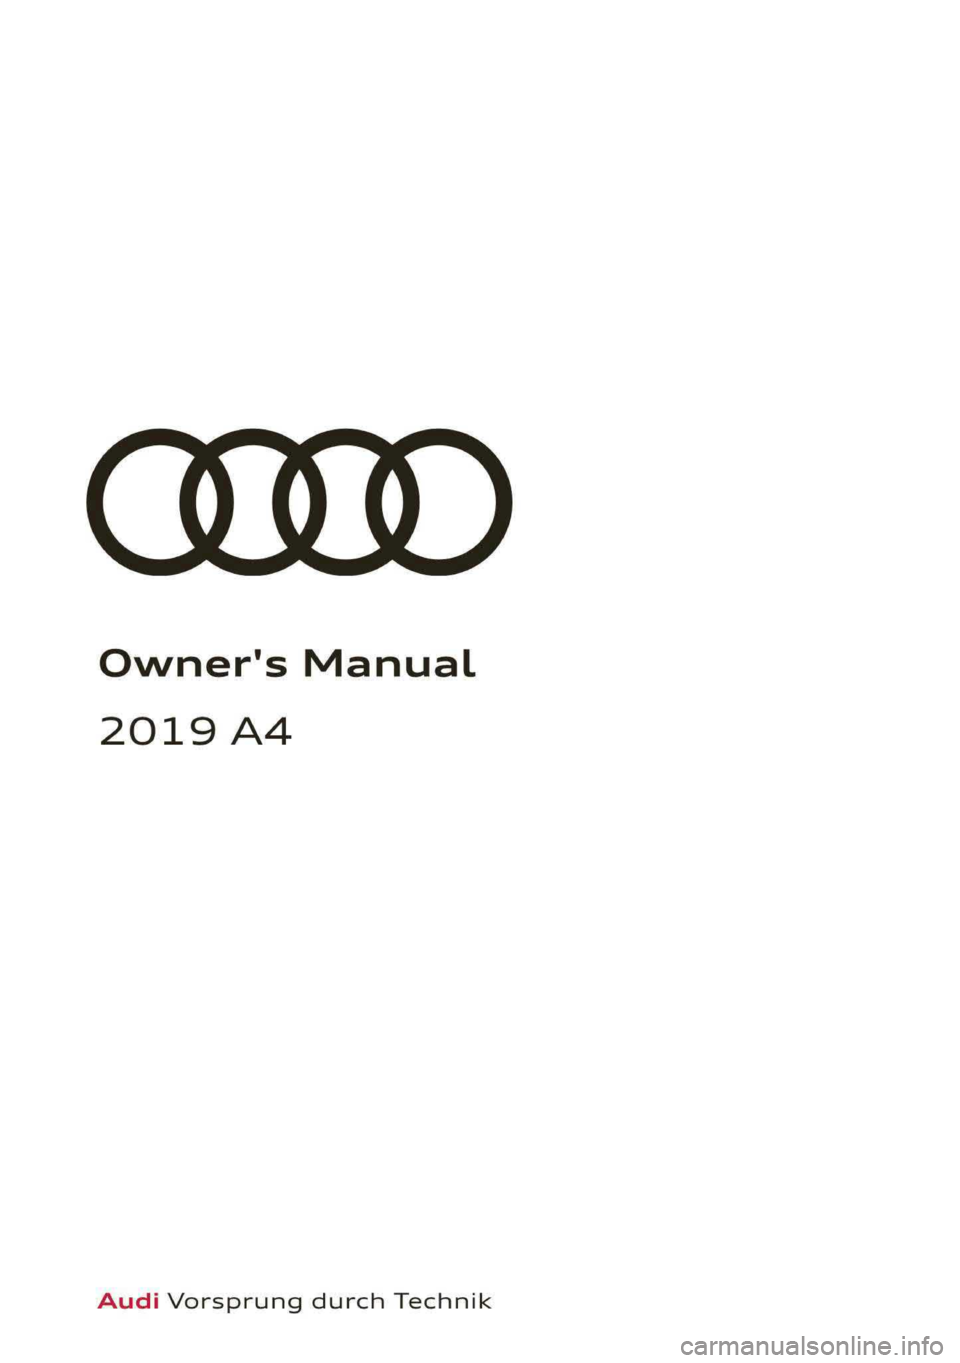 AUDI A4 2019  Owners Manual Owner'sManual
2019A4
AudiVorsprungdurchTechnik  